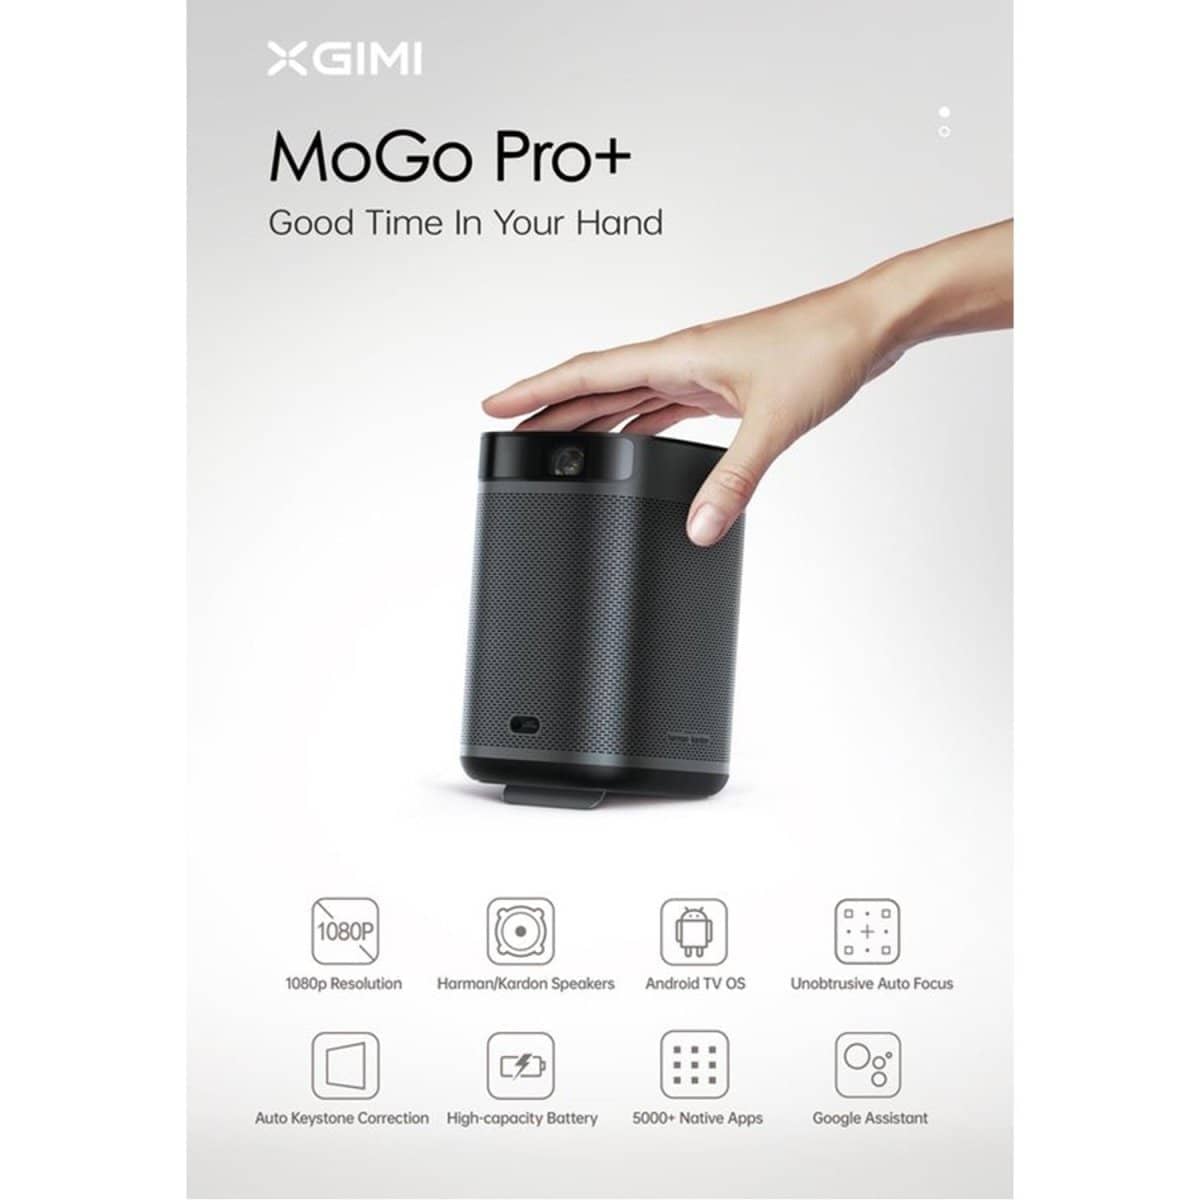 XGIMI MoGo Pro+ Smart FHD 1080p Projector